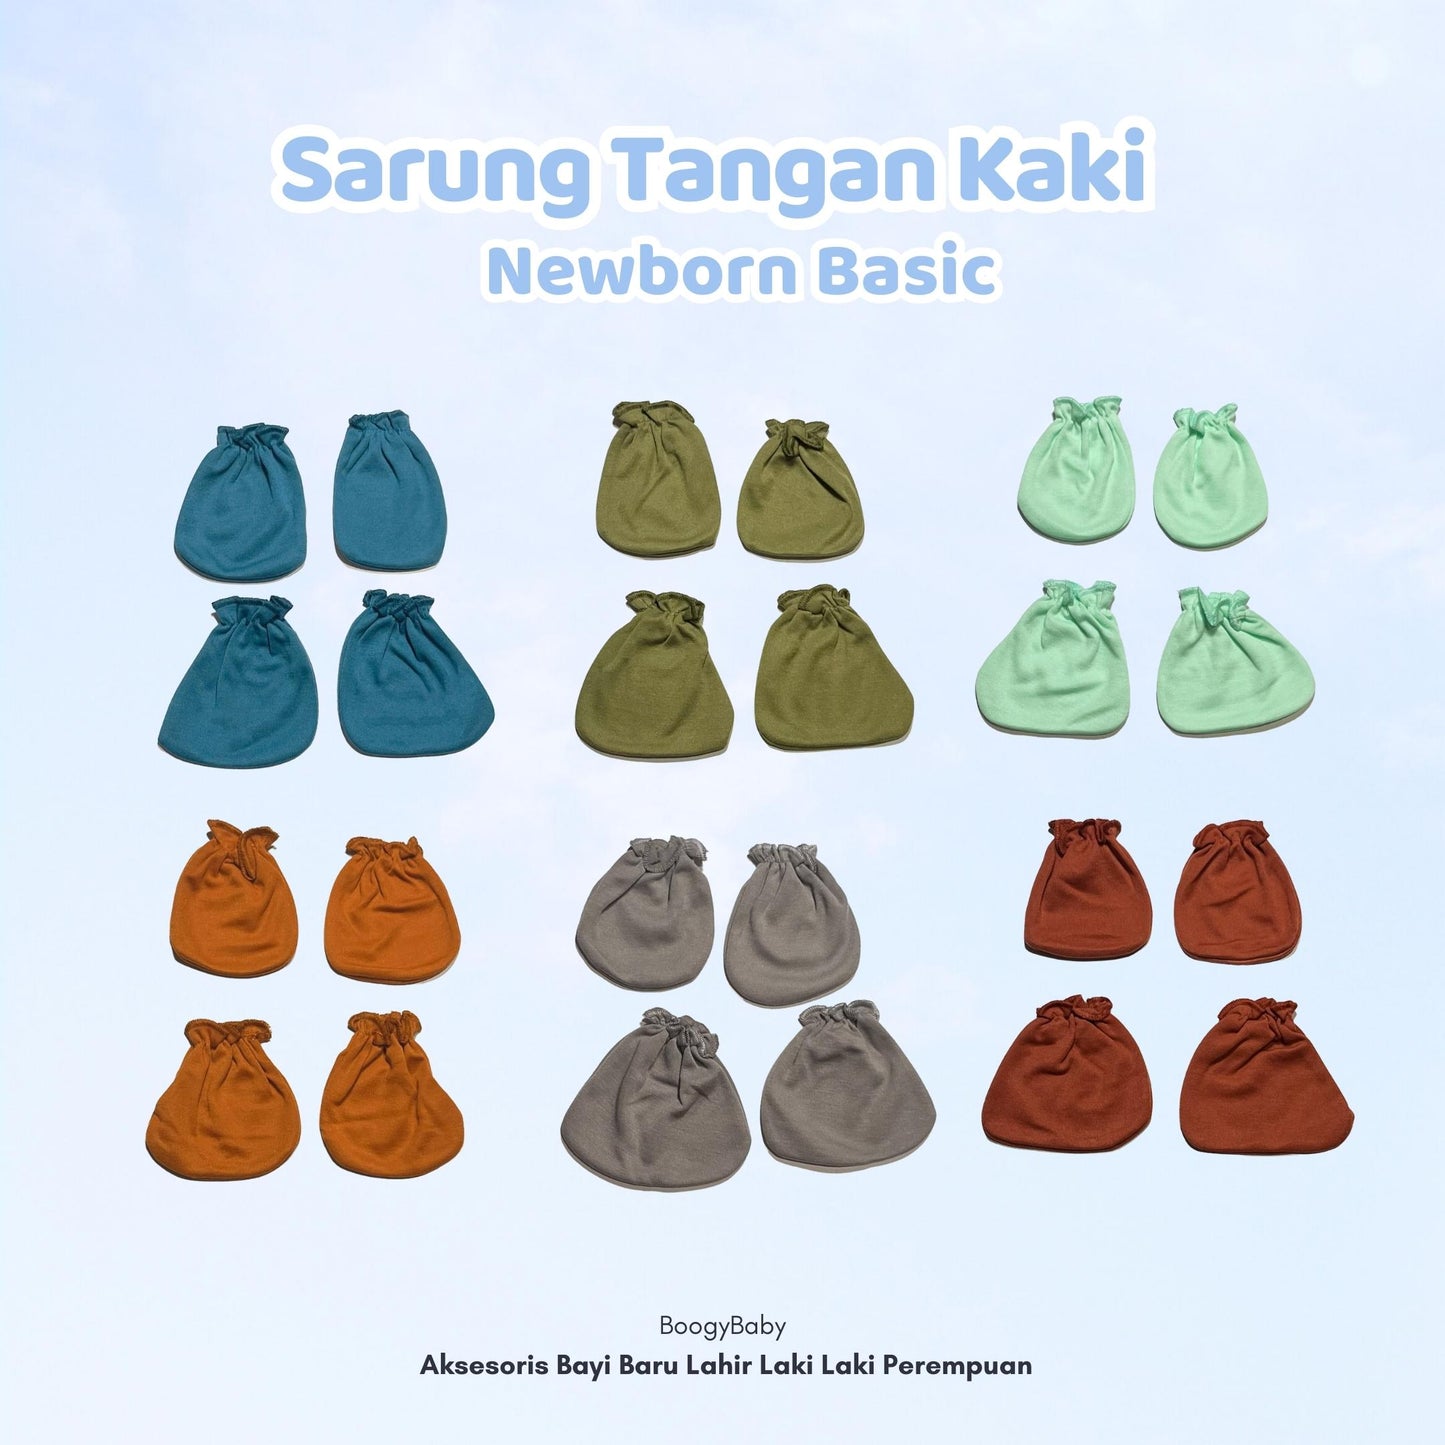 Sarung Tangan Kaki Newborn Basic (1 Set)